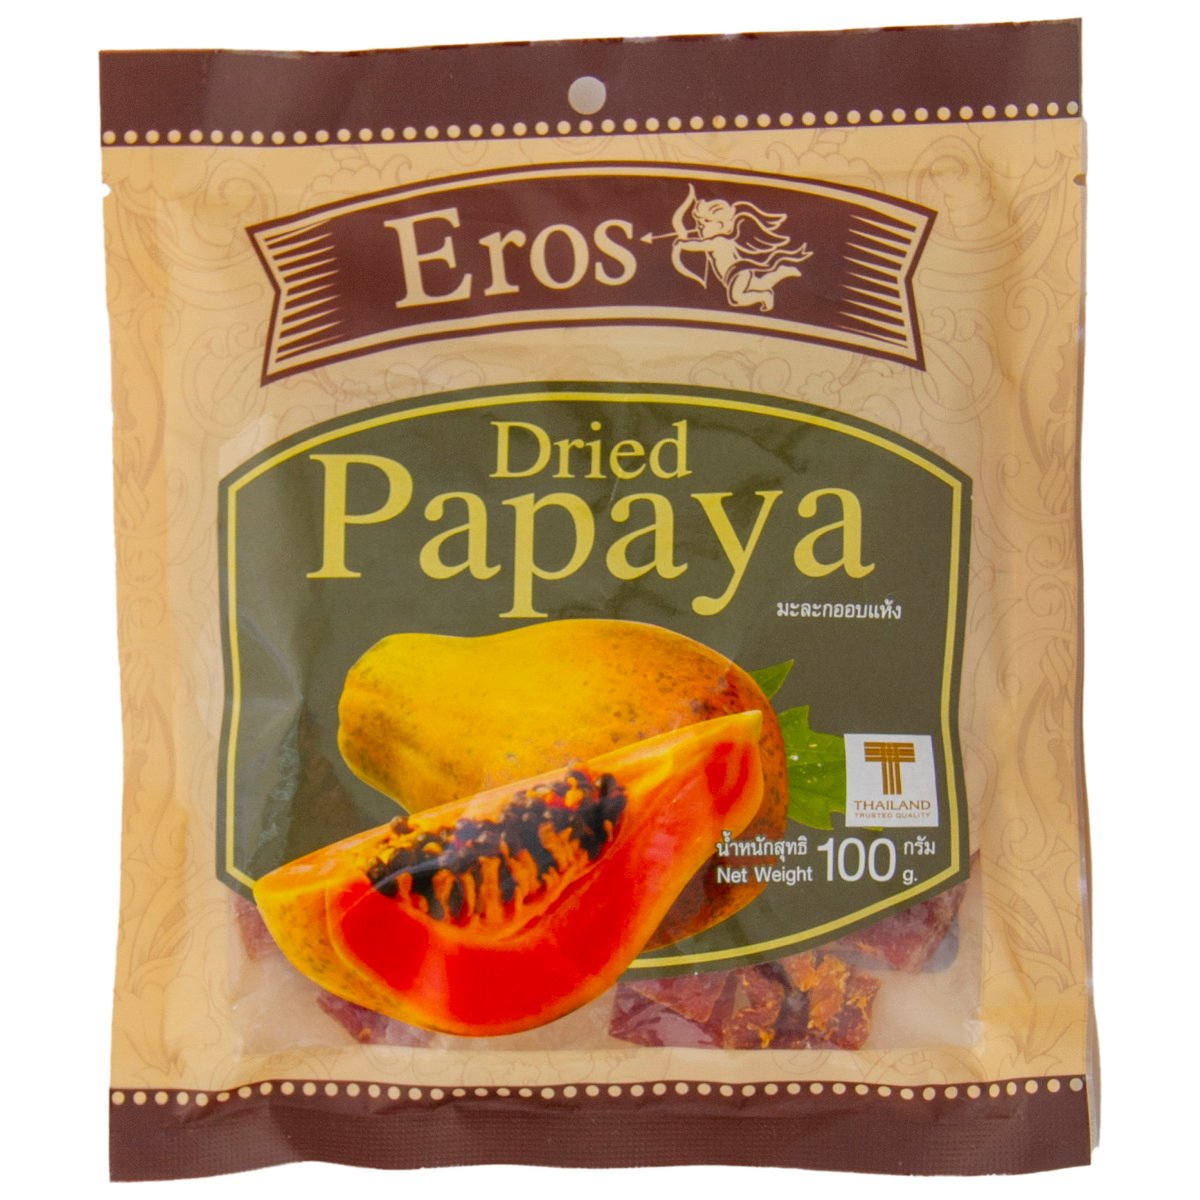 Eros Dried Papaya 100g